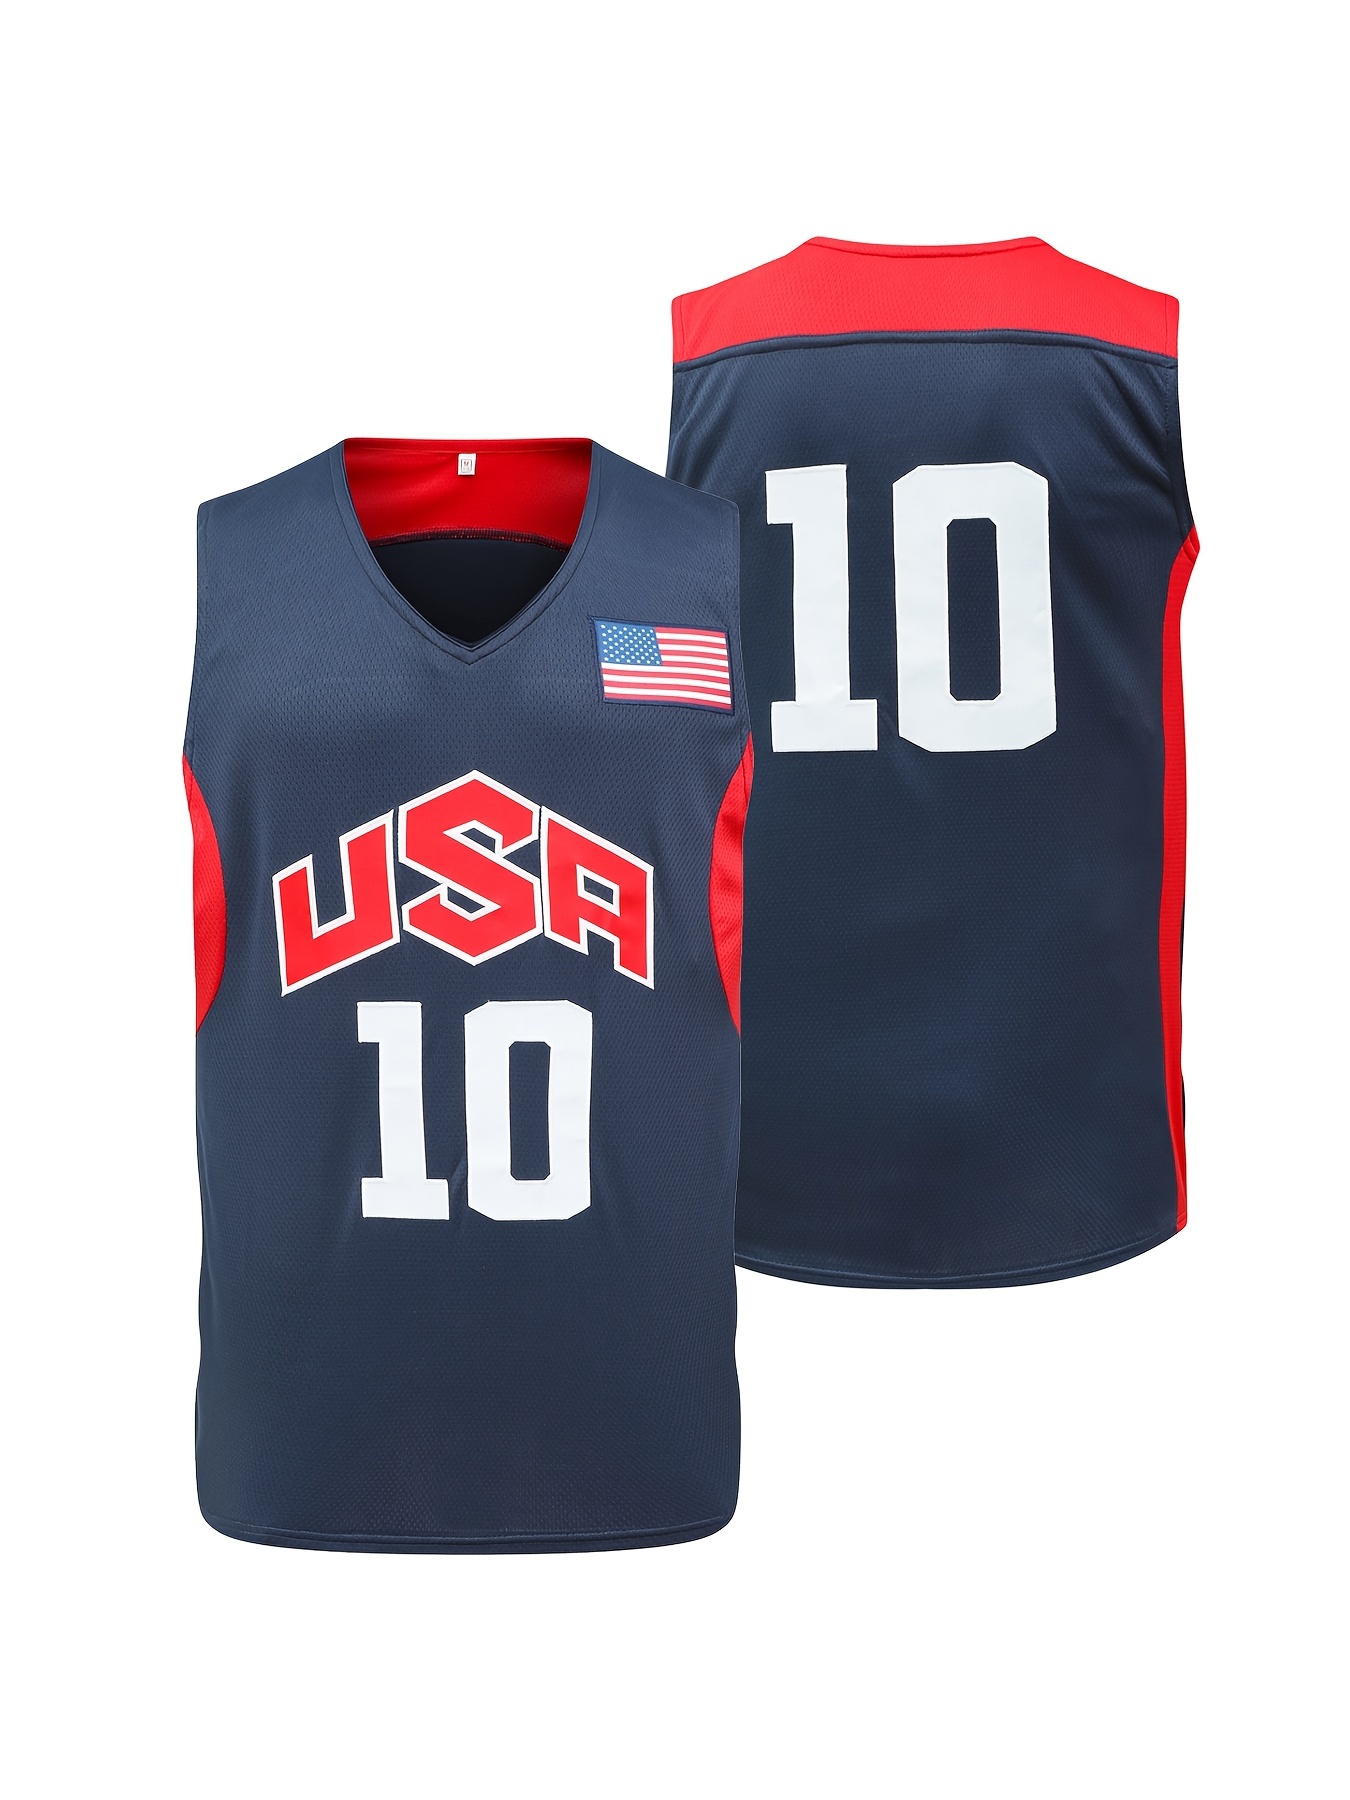 Men's USA #10 Embroidered Basketball Jersey, Active Retro V Neck Sleeveless Uniform Basketball Shirt for Training Competition S-XXXL,Temu